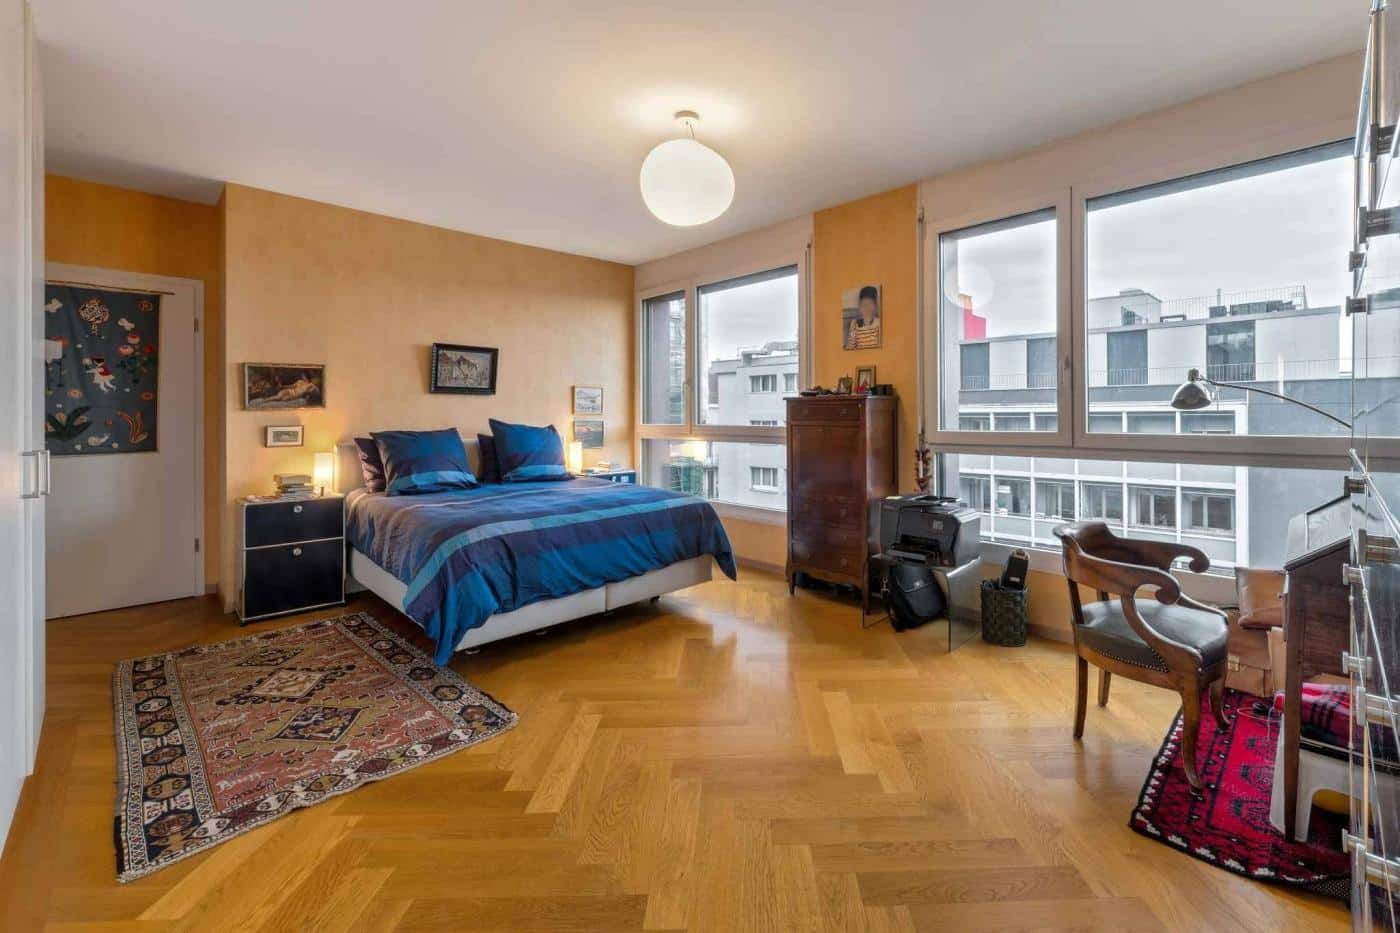 À vendre : Appartement 4 chambres Genève - Ref : 37824 | Naef Immobilier